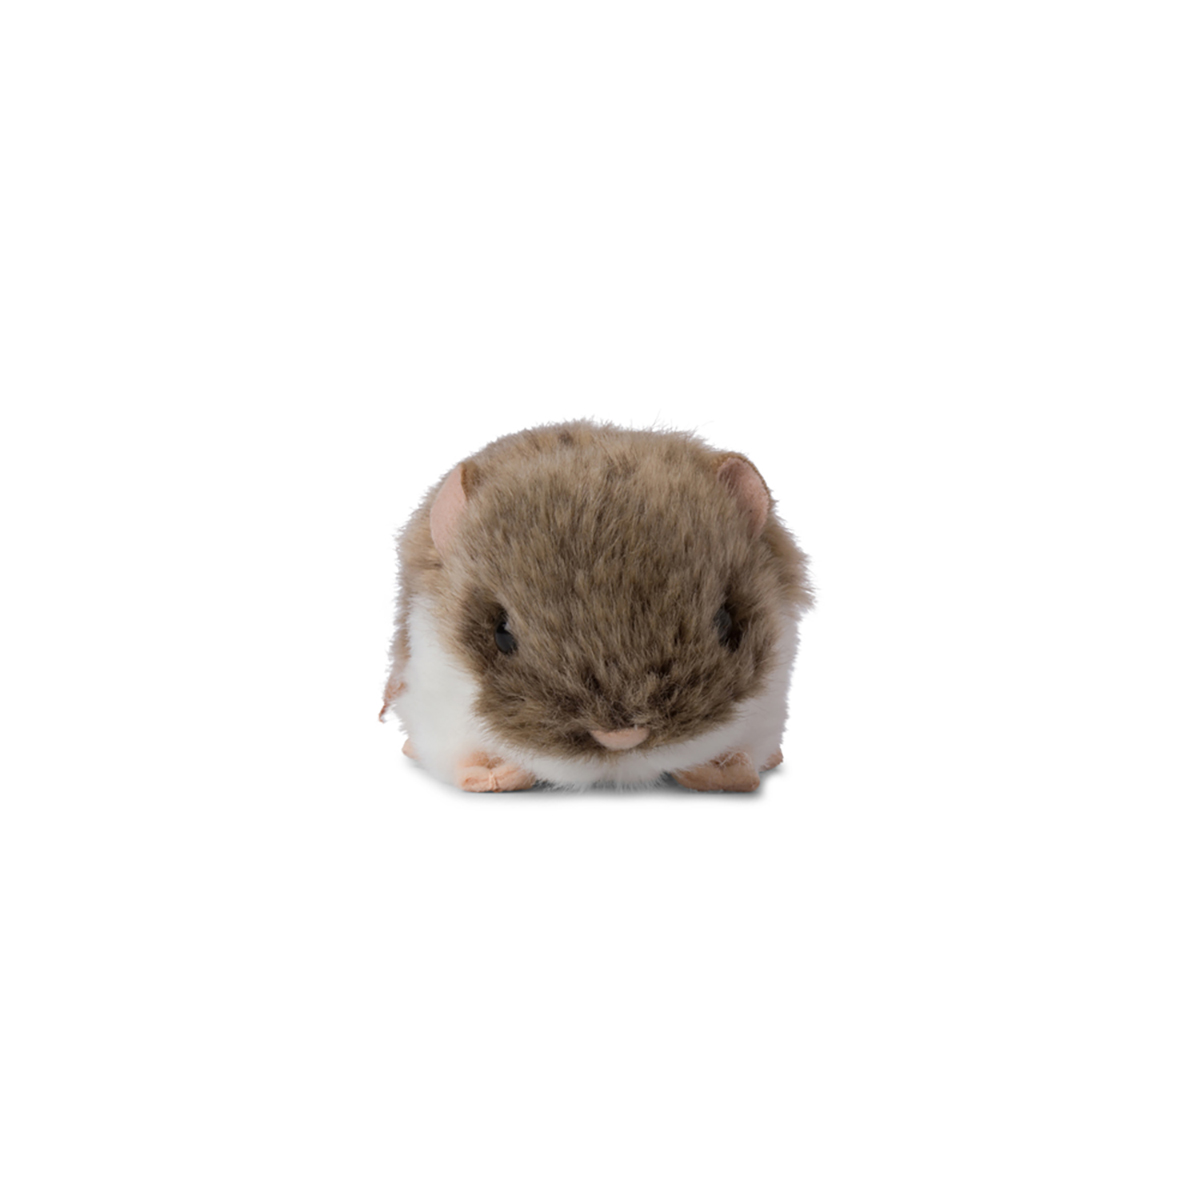 MY (7cm) Plüschtier Hamster WWF ANIMAL